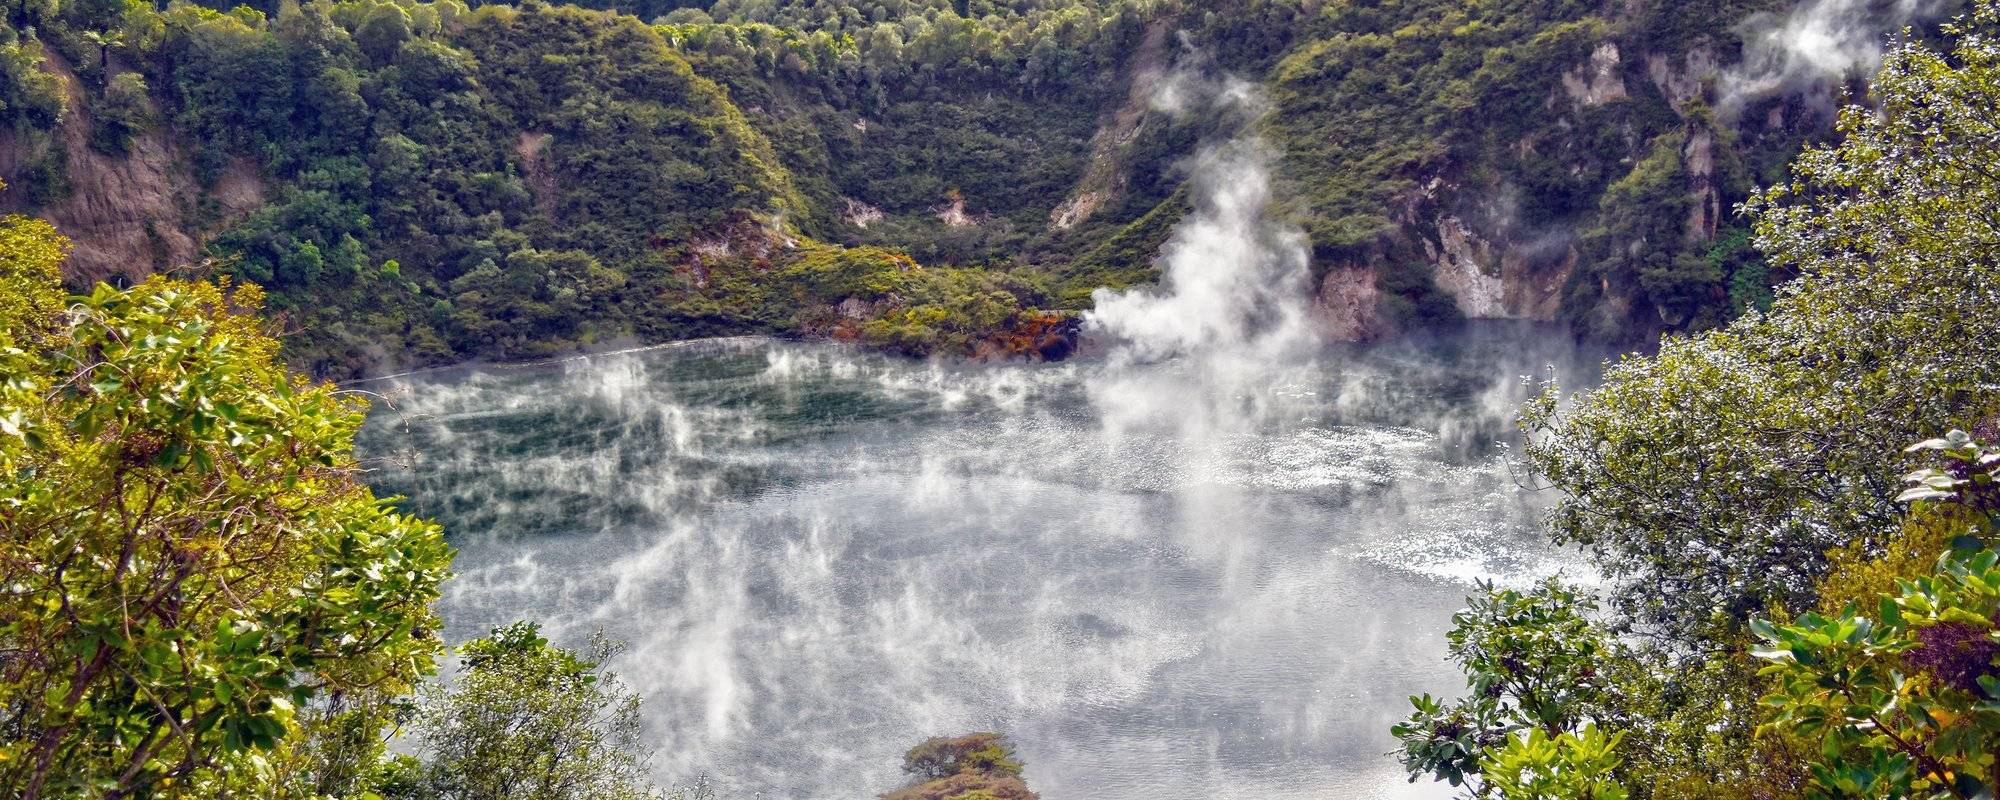 Travelling with Stabilo #27: Waimangu Volcanic Valley 经纬游踪 #27: 怀芒古火山谷地热区